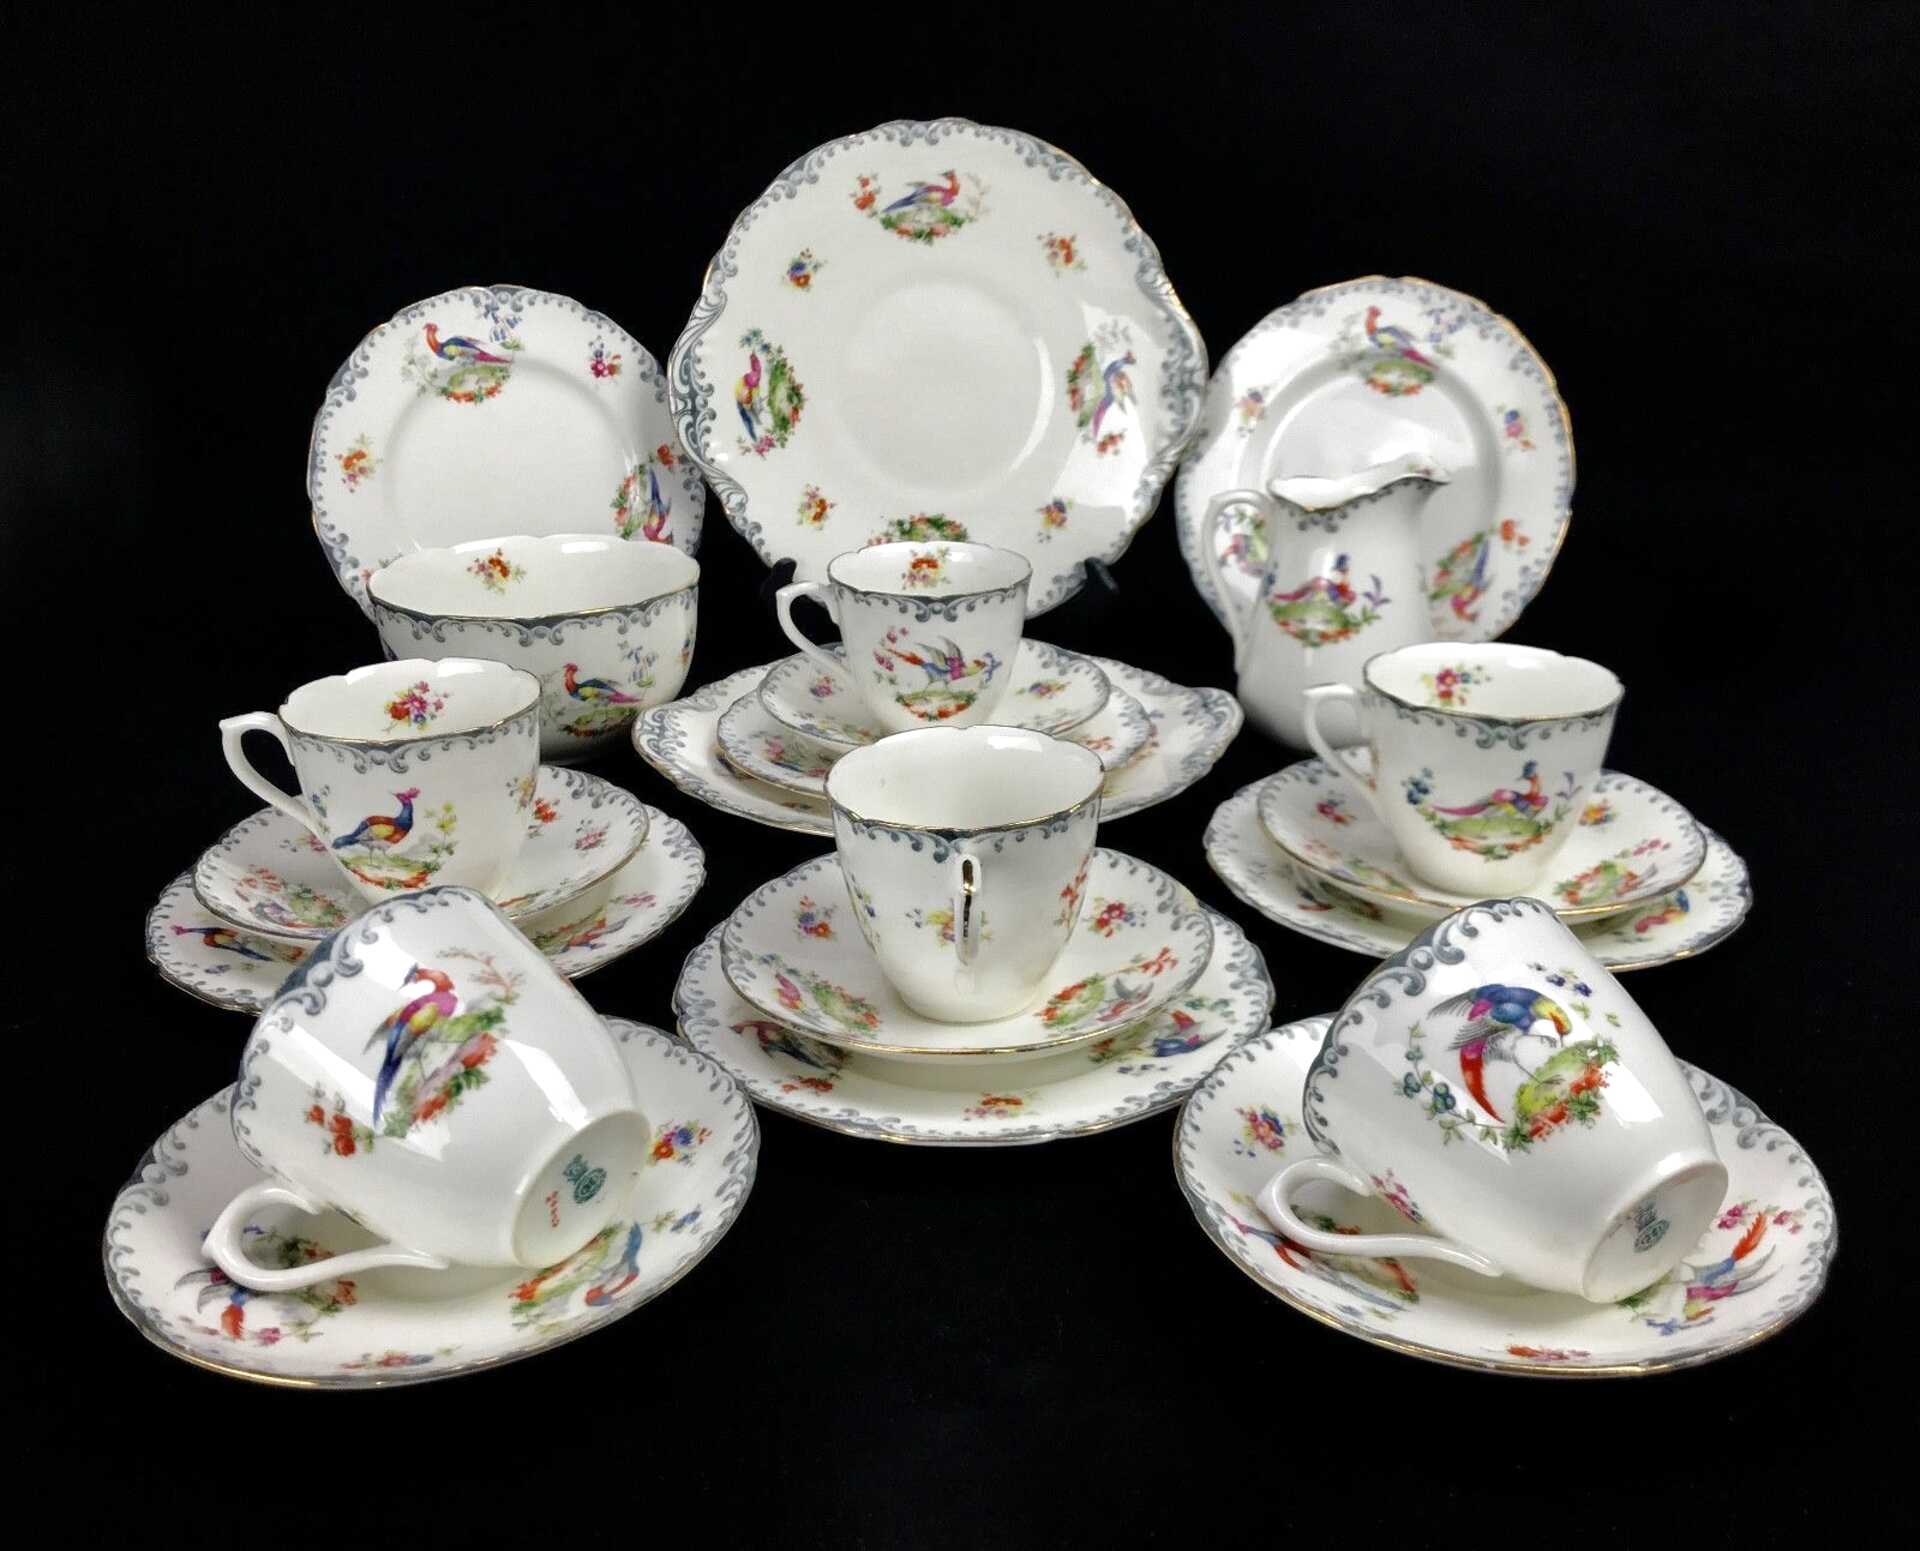 Antique Royal Doulton Tea Set for sale in UK